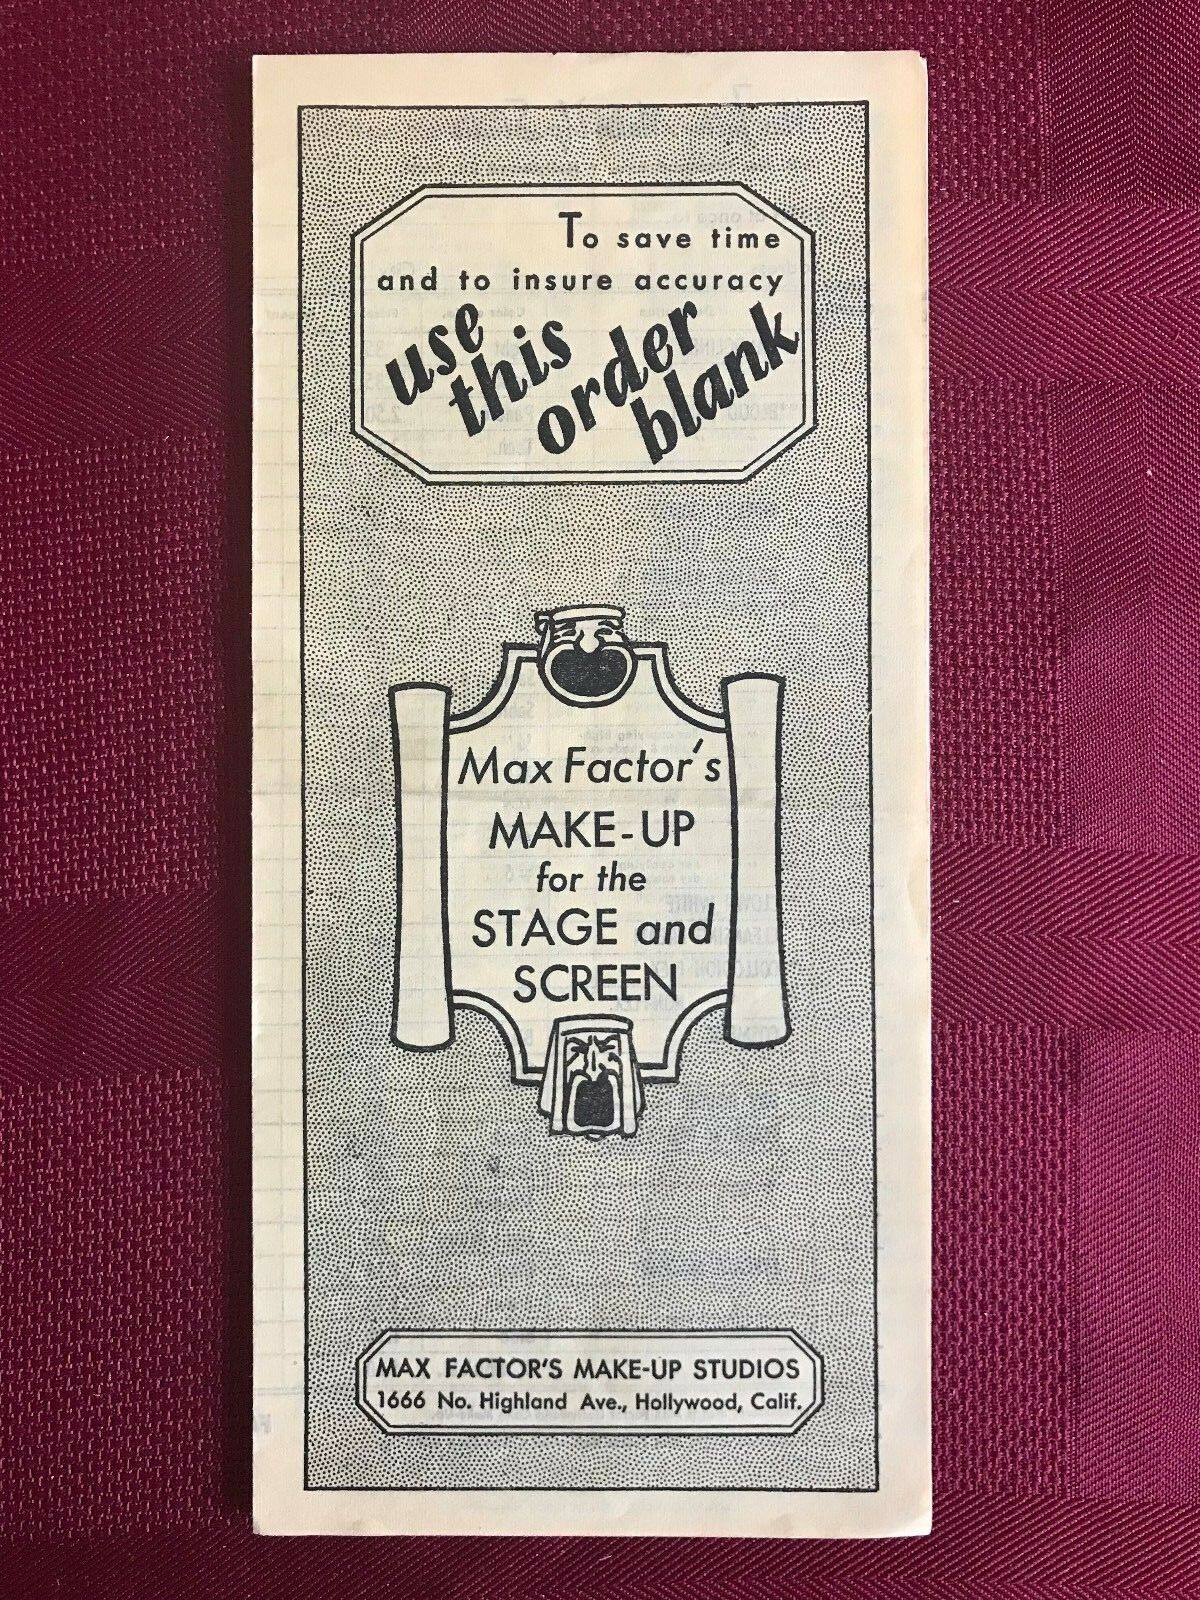 Max Factor Theatre Makeup Brochures Price Order Sheet 1954 Rare C